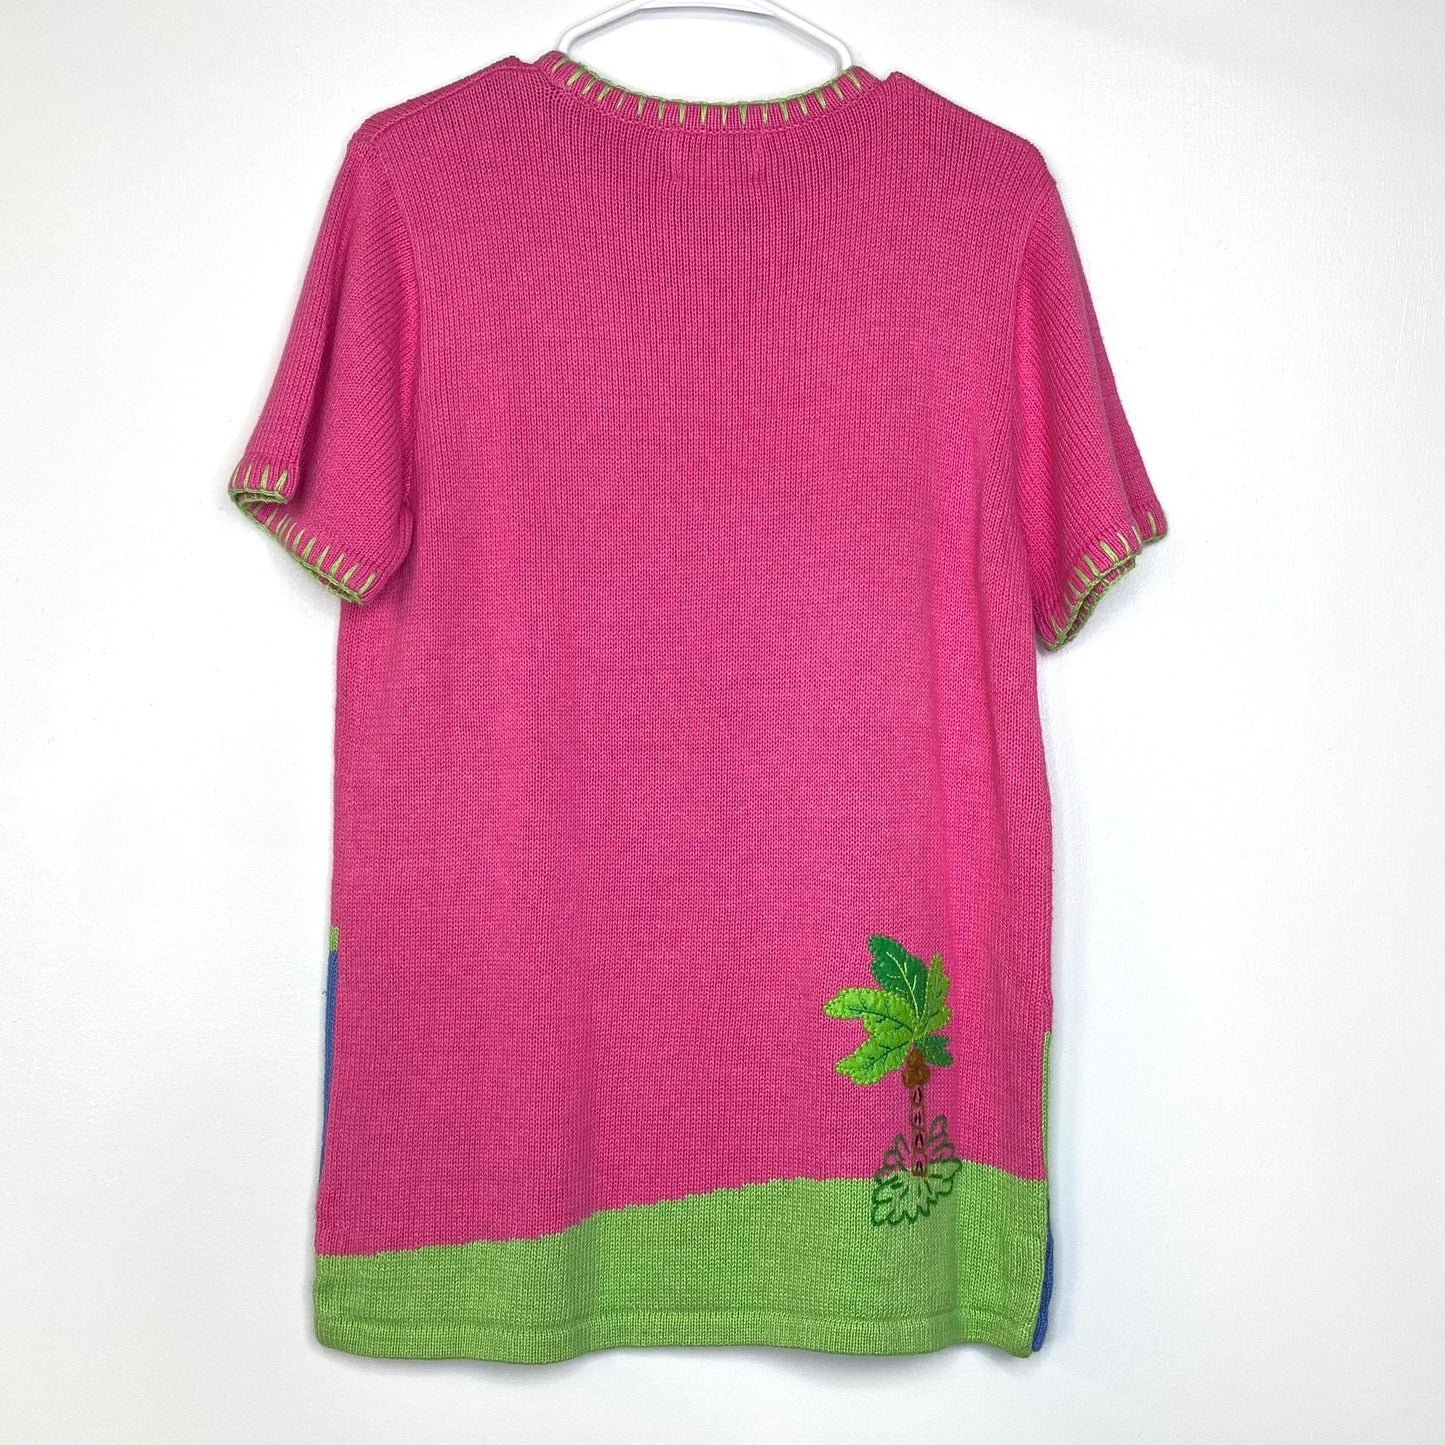 Charming Quacker Factory Womens Size Small Short Sleeve Sweater Shirt Pink Flamingos Palm Trees EUC